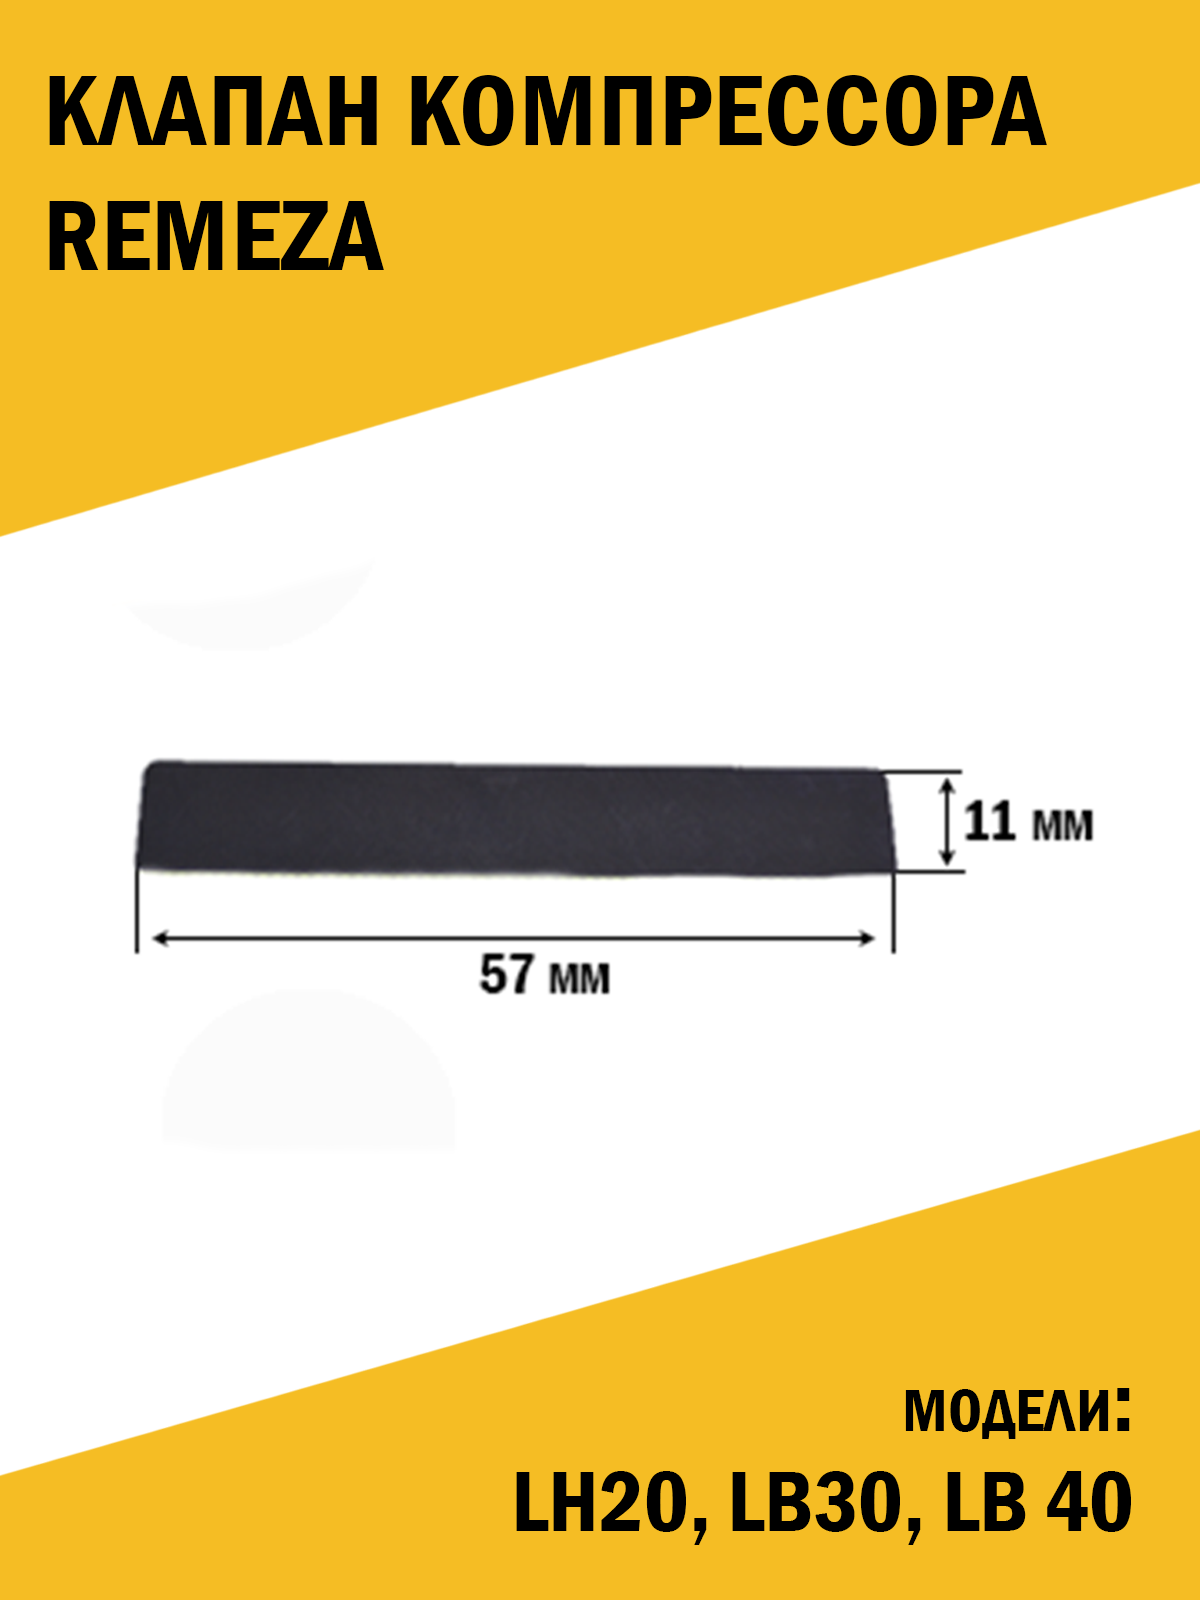 Клапан компрессора Remeza Ремеза LH20, LB30, LB 40, 11*57 мм.